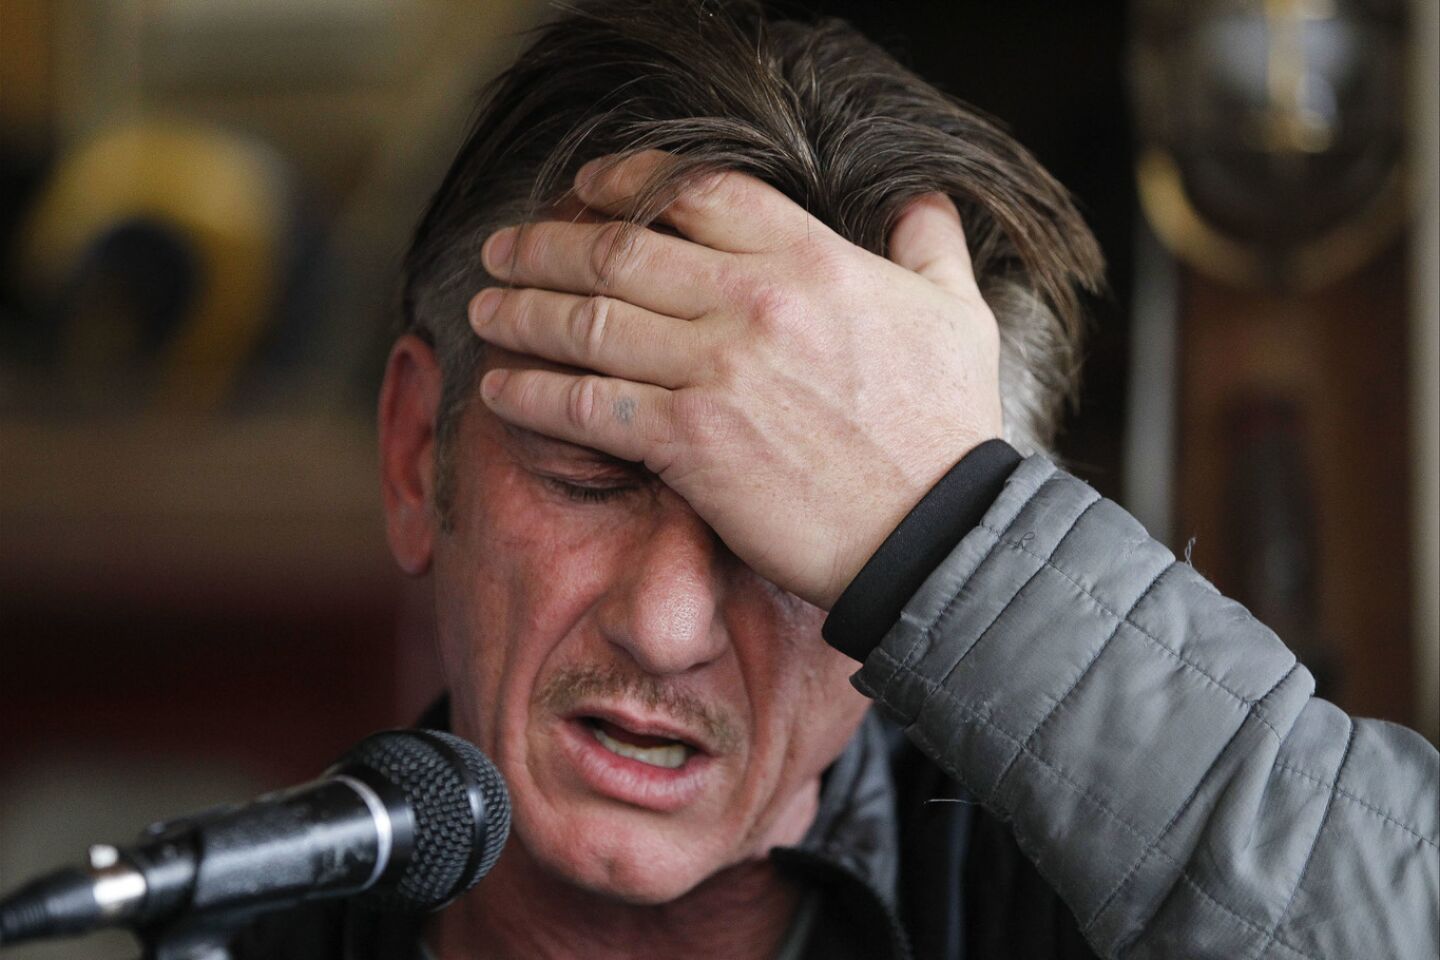 Actor Sean Penn promotes new book in La Jolla